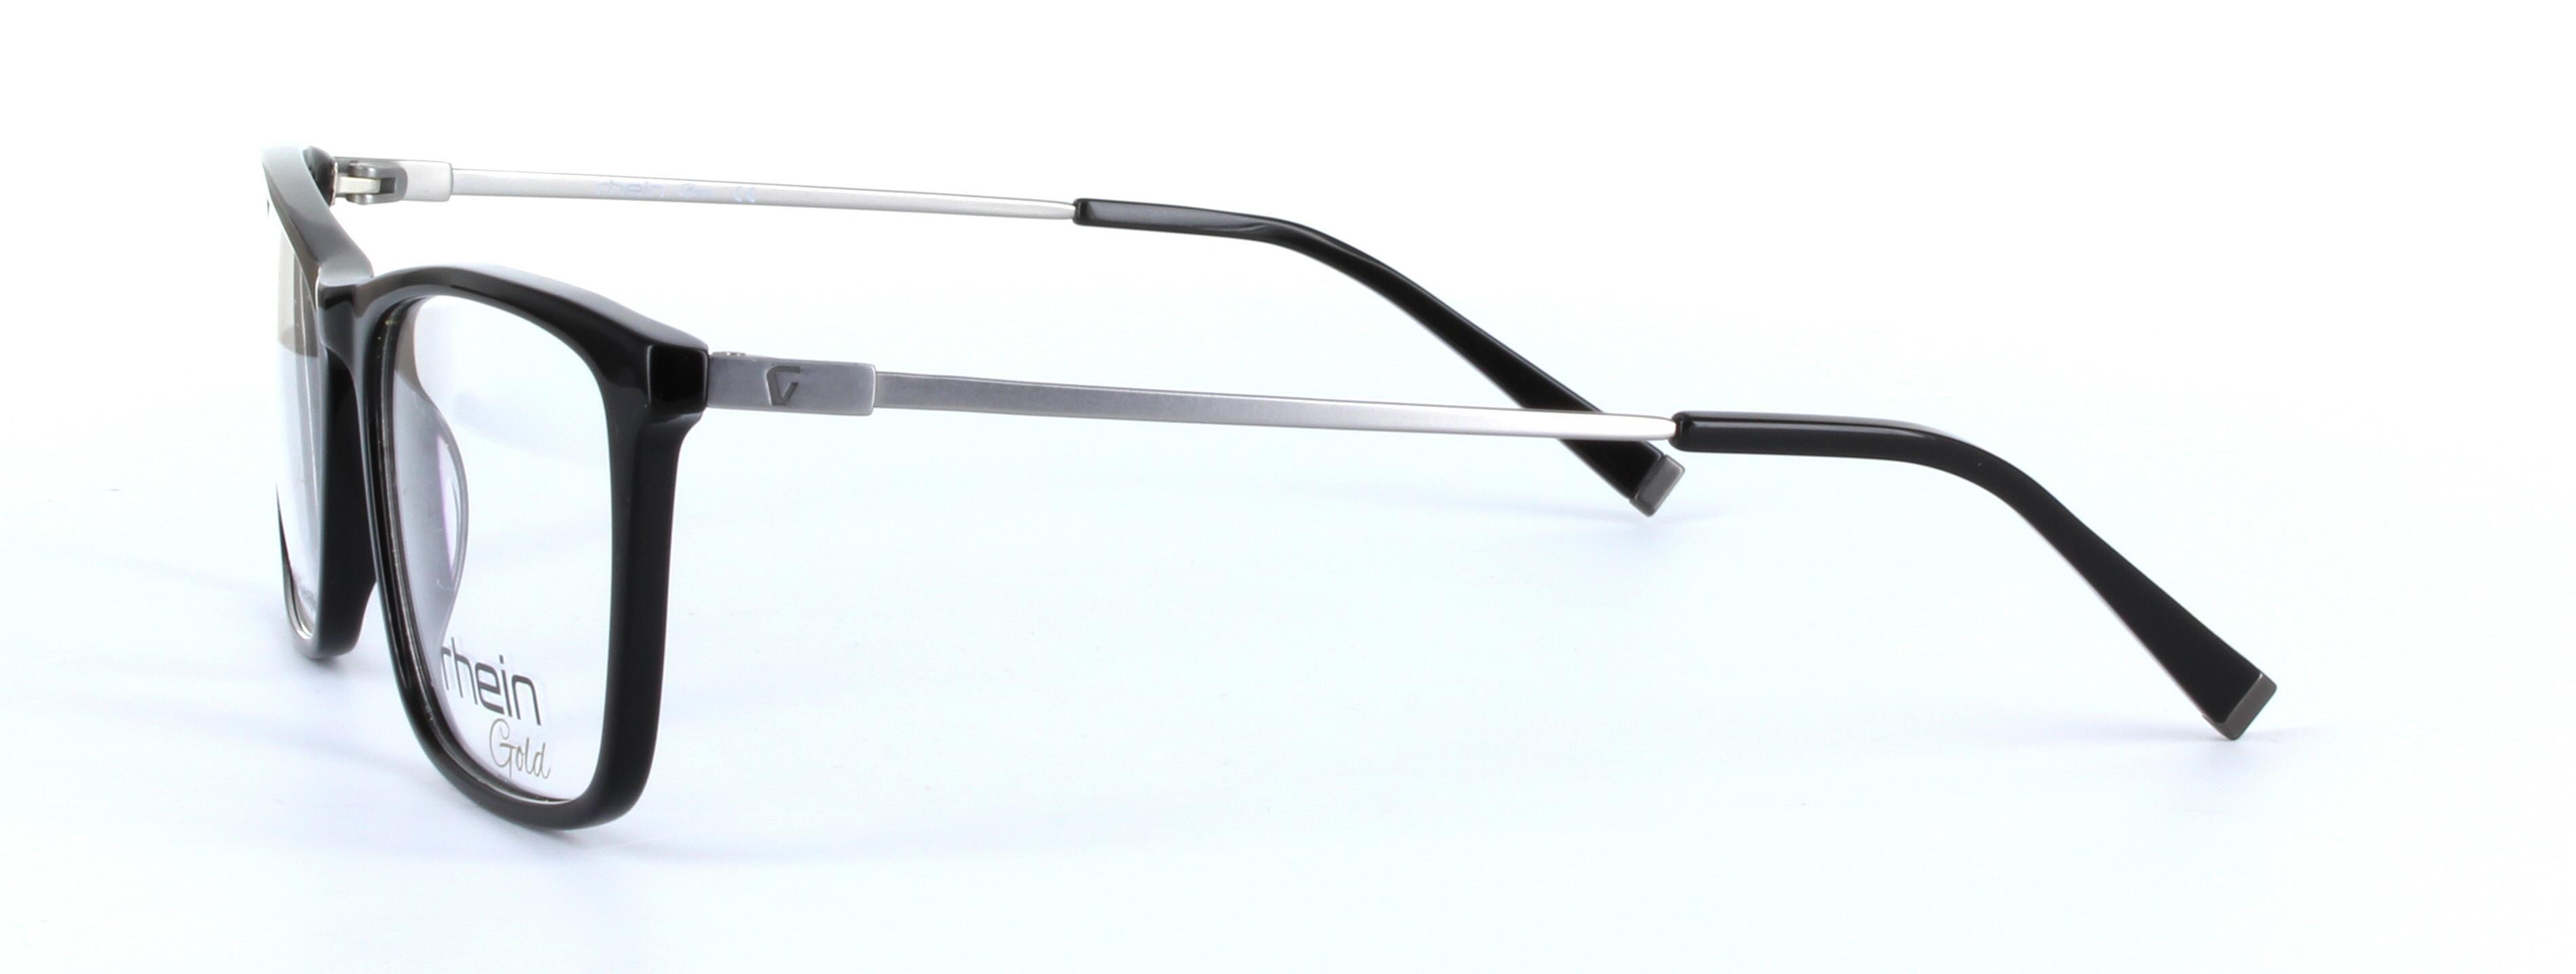 Chatsworth Black Full Rim Square Plastic Glasses - Image View 2